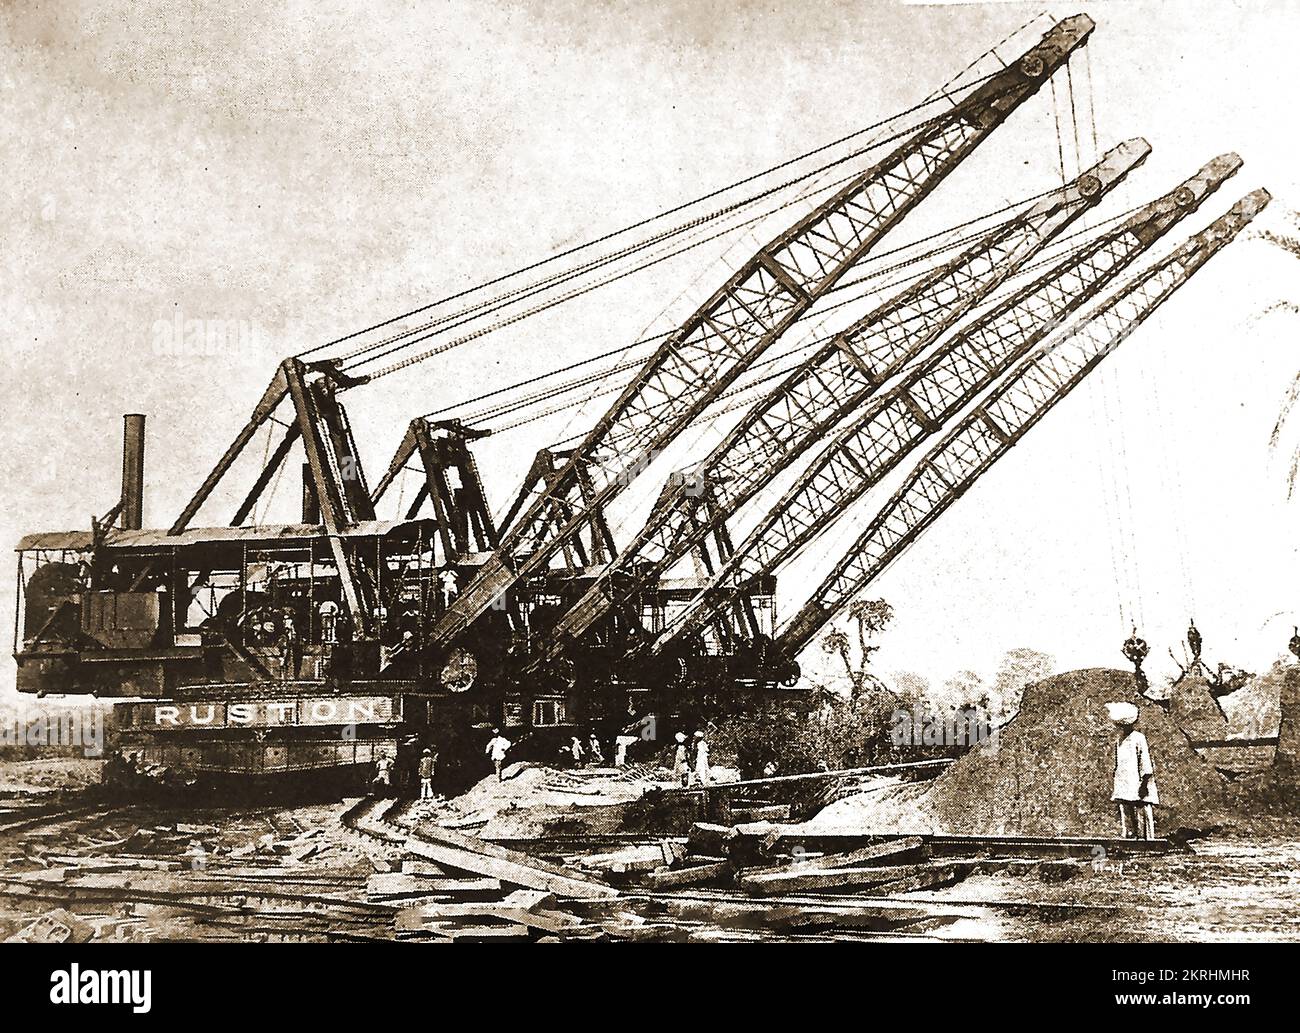 Scavare canali in India negli anni '30 utilizzando gru a linea di trascinamento, ciascuna in grado di un cucchiaio da dieci tonnellate. Il dragline è stato inventato nel 1904 da John W. Page per scavare il canale di Chicago --- 1930 के दशक में ड्रैग-लाइन क्रेन का उपयोग करके भारत में नहरों की खुदाई, जिनमें से प्रत्येक दस टन बाल्टी स्कूप में सक्षम था। ड्रैगलाइन का आविष्कार 1904 में जॉन डब्ल्यू पेज ने शिकागो नहर खोदने के लिए किया था - ۱۹۳۰ کی دہائی میں ڈریگ لائن کرین کا استعمال کرتے ہوئے ہندوستان میں نہروں کی کھدائی کی گئی، جن میں سے ہر ایک دس ٹن بالٹی اسکوپ کرنے کی صلاحیت رکھتی ہے۔ Foto Stock